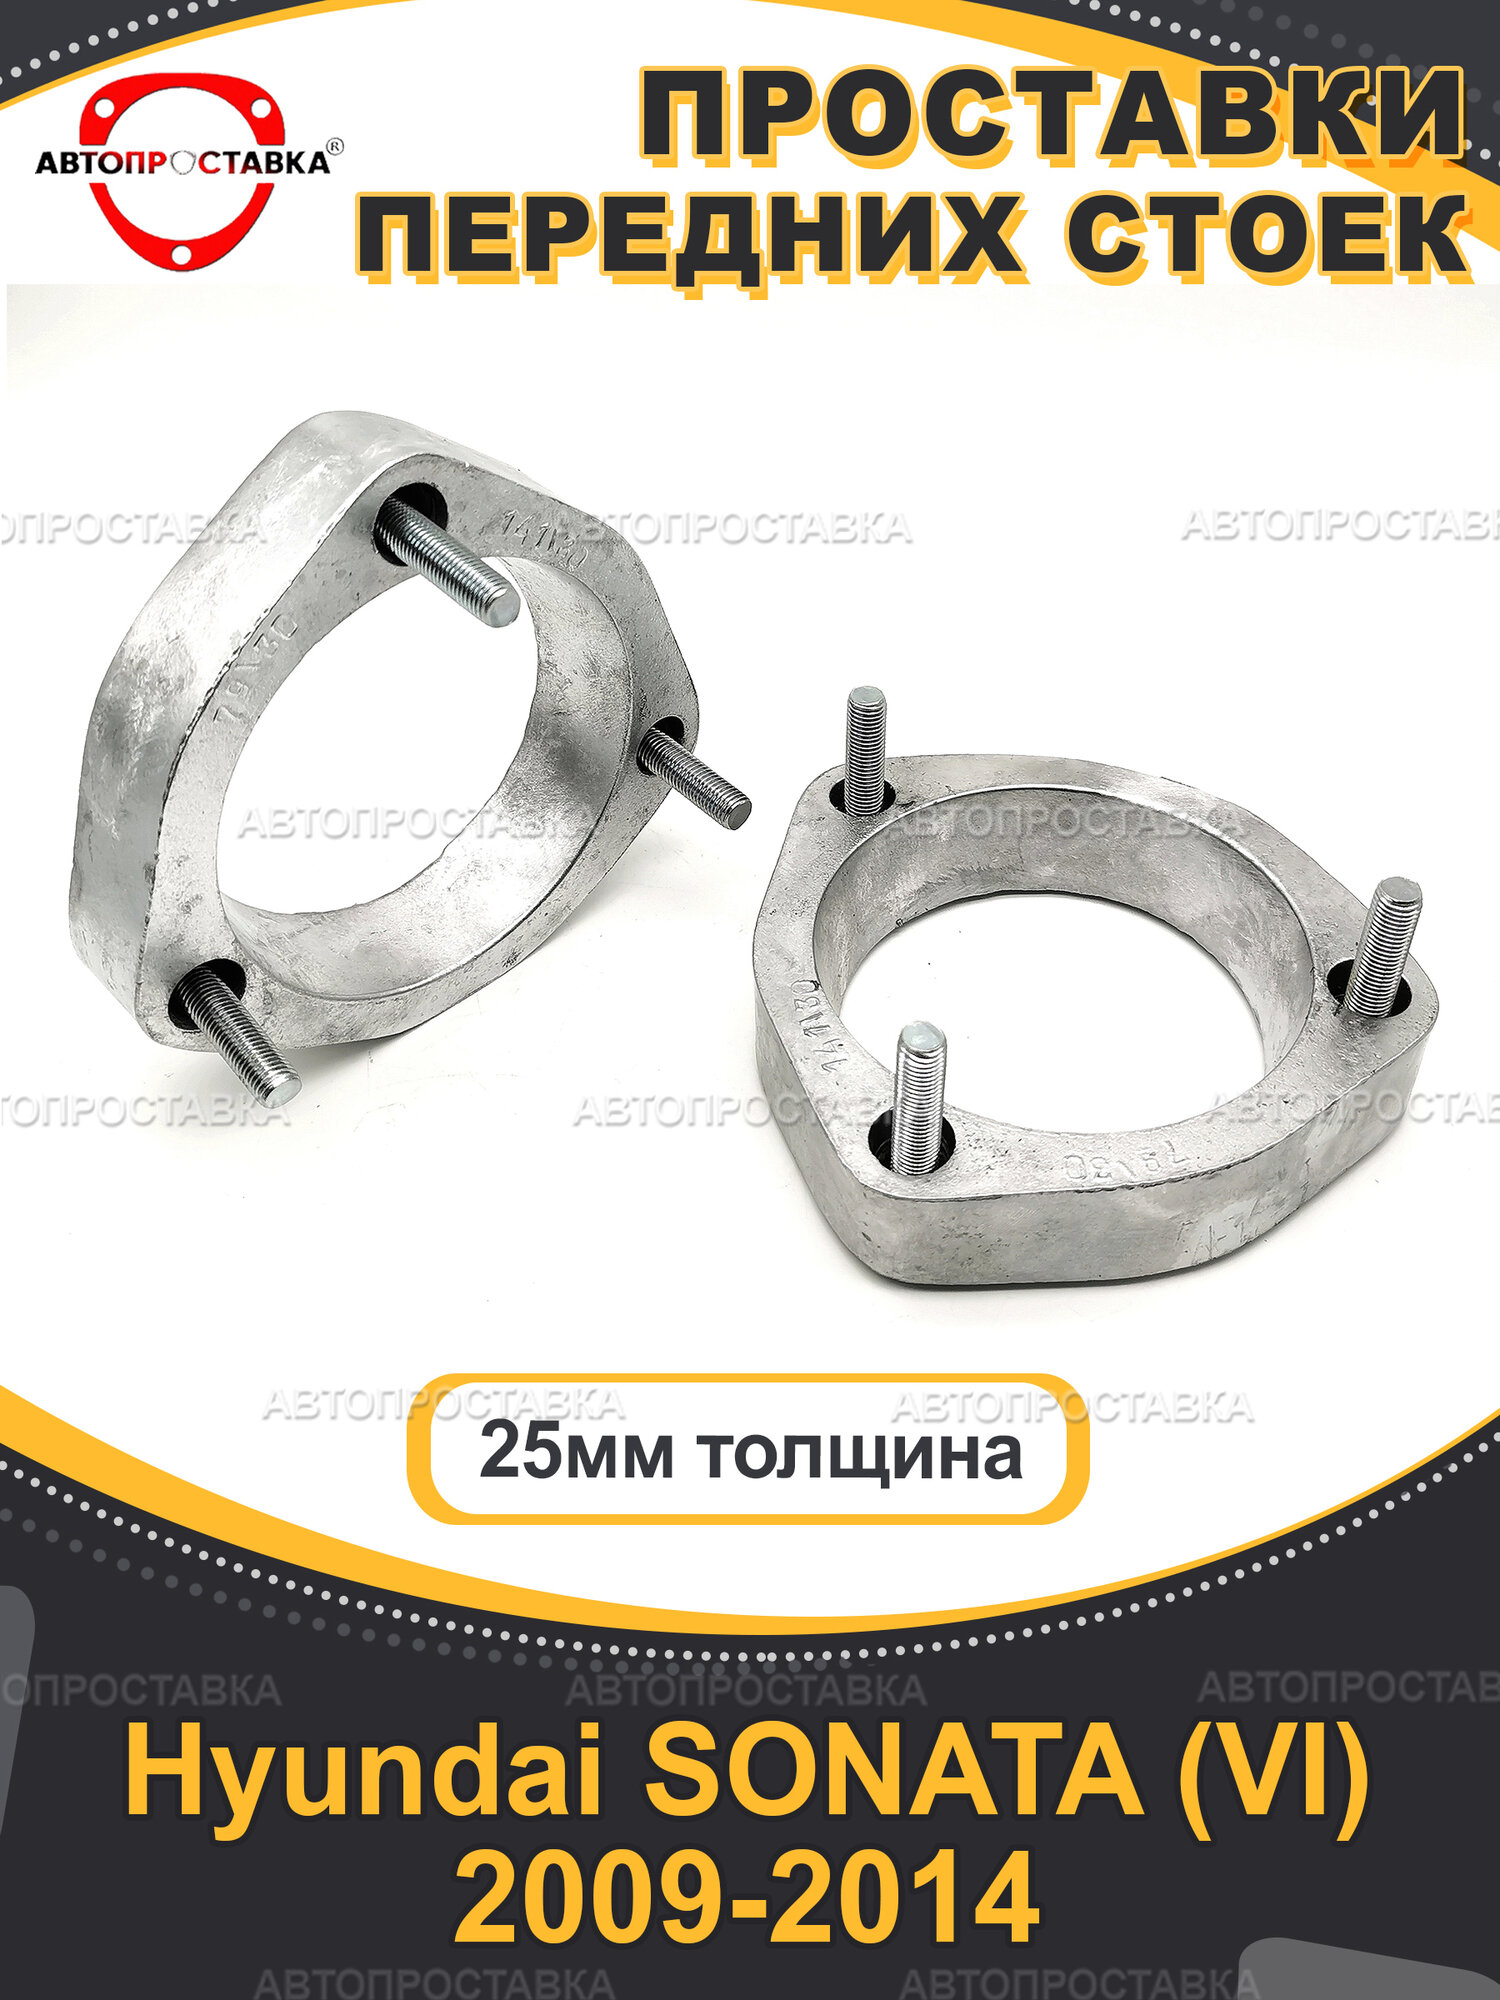 Передние проставки 25 мм для Hyundai SONATA (VI) GF/YF 2009-2014 алюминий 2шт / Автопроставка